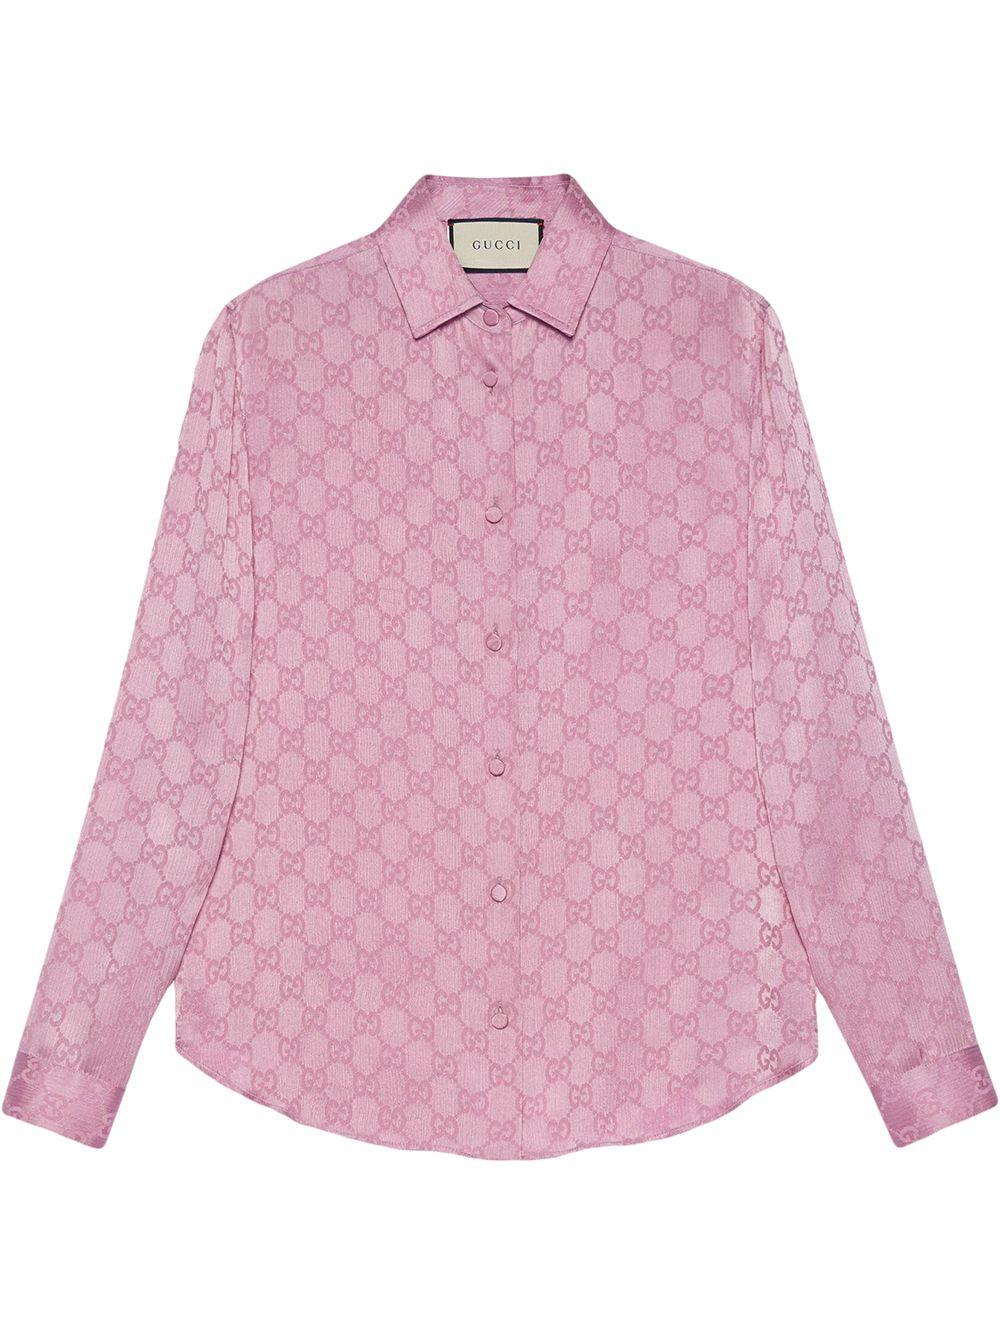 Gucci Silk GG Monogram Printed Shirt in Pink | Lyst